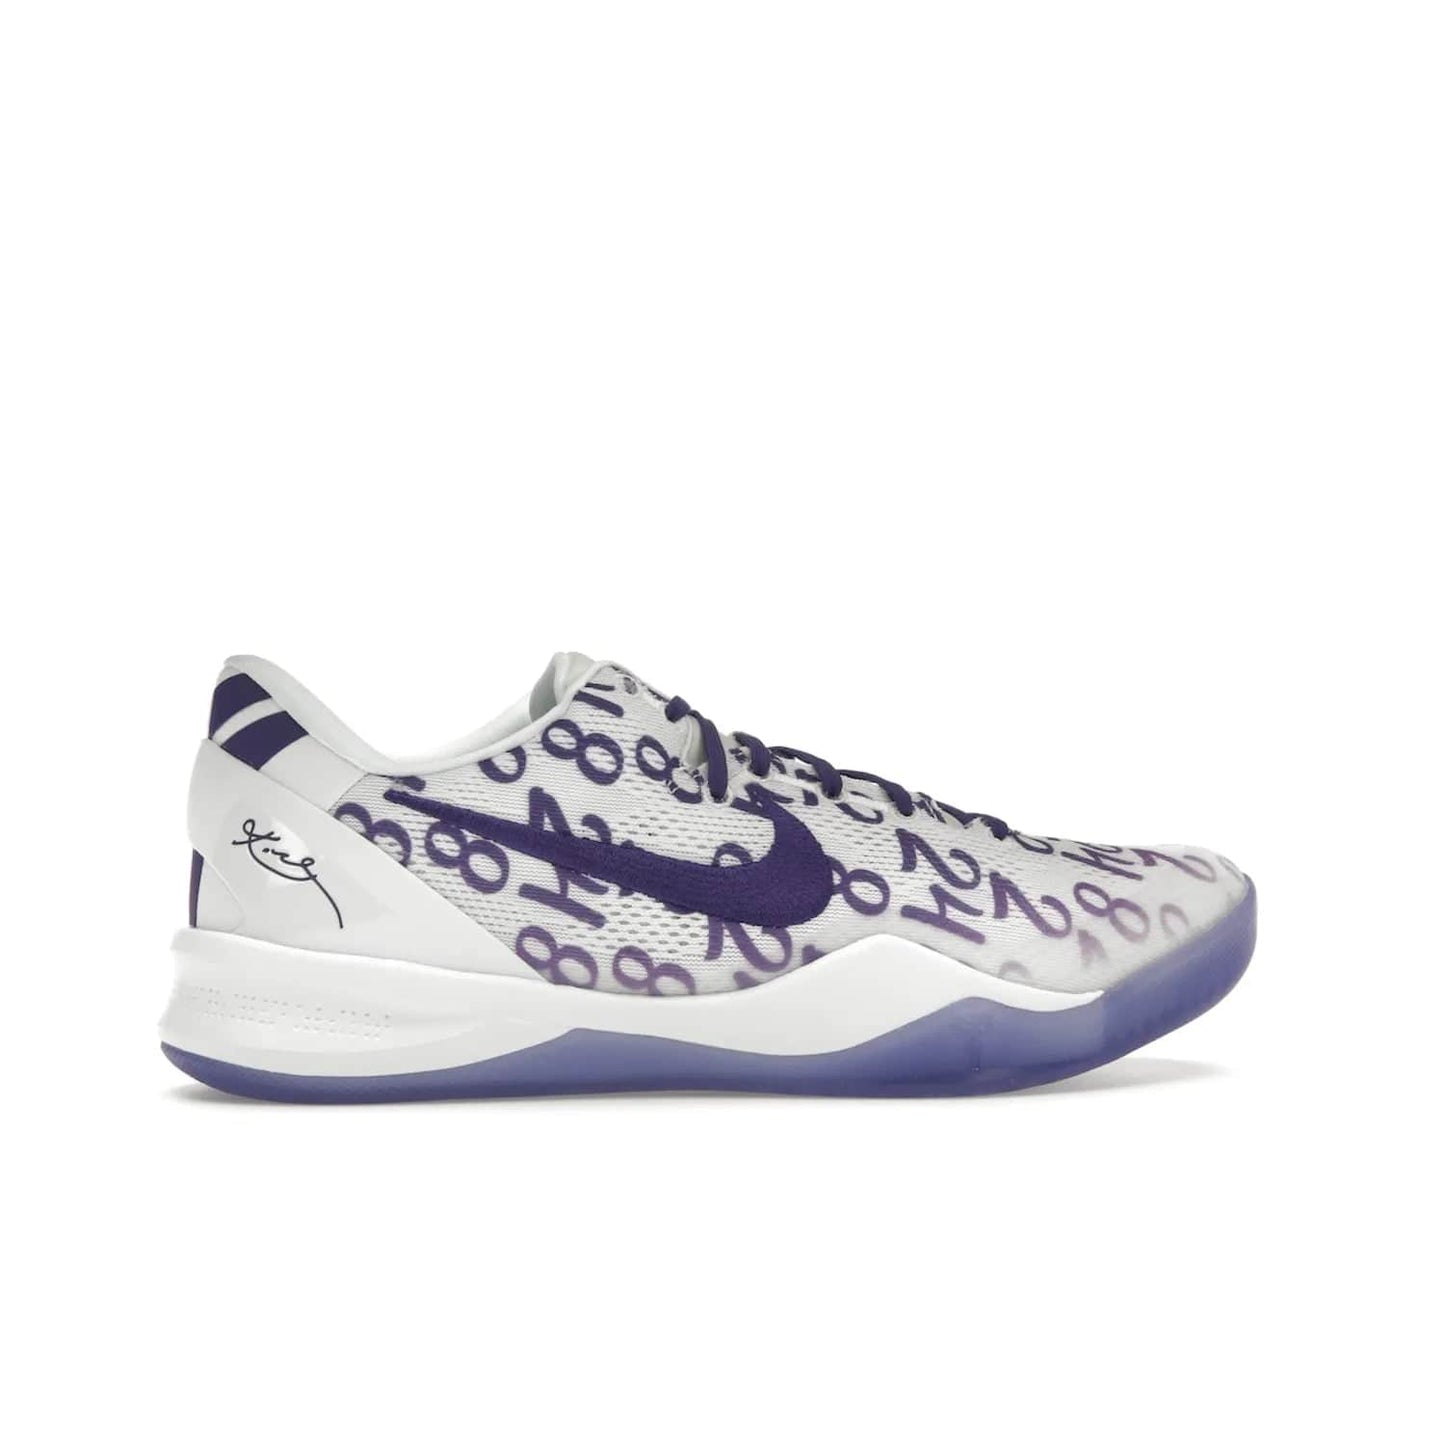 Nike Kobe 8 Protro Court Purple - Image 36 - Only at www.BallersClubKickz.com - 